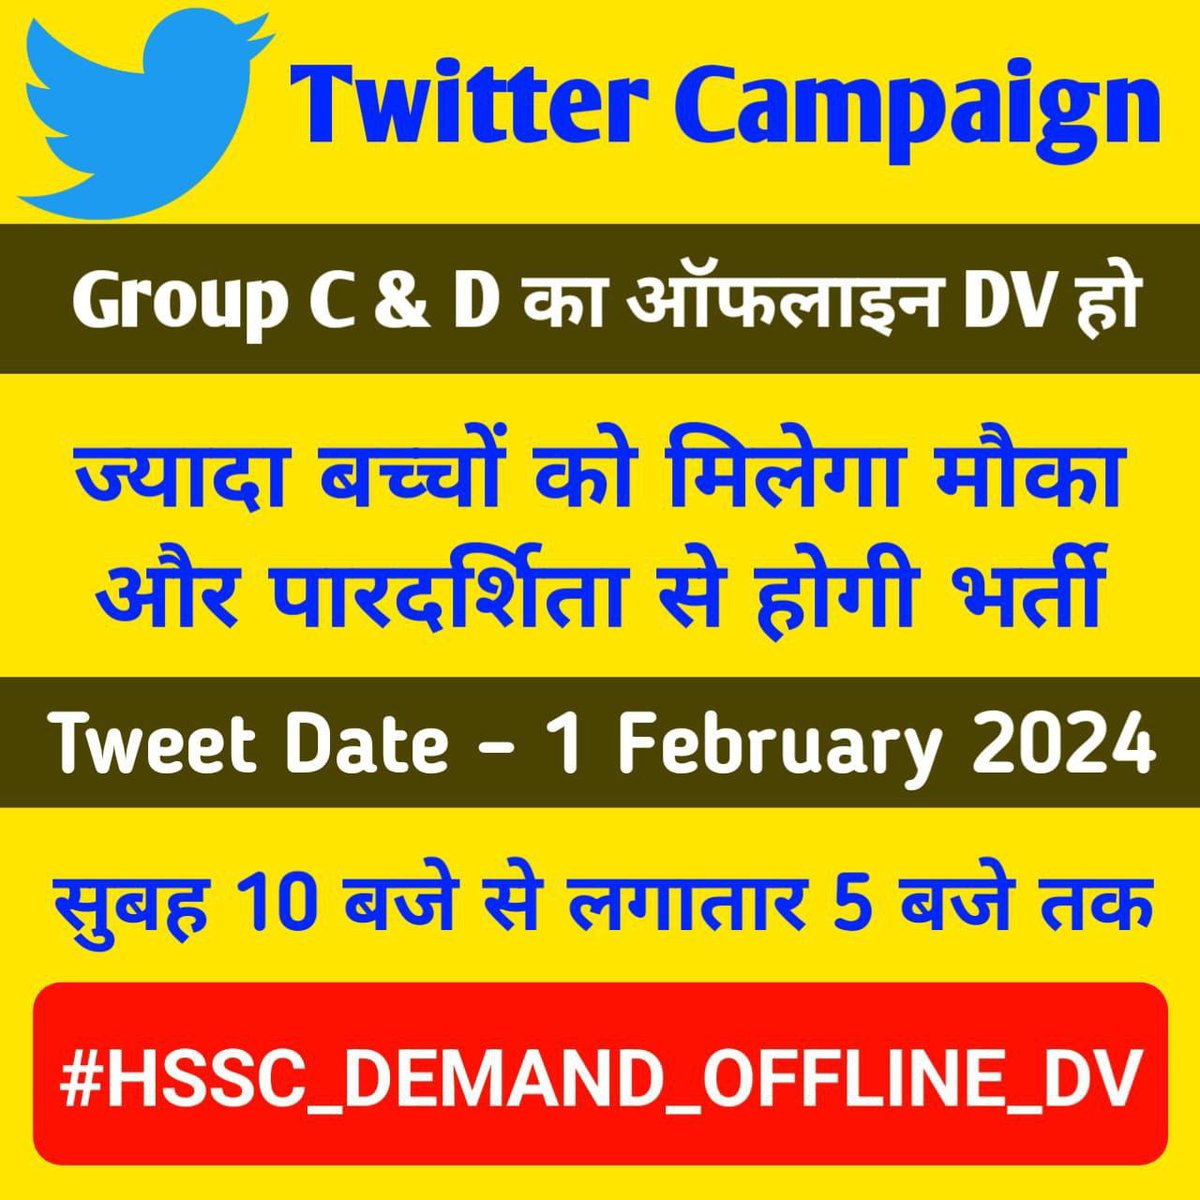 #HSSC_DEMAND_OFFLINE_DV
@cmohry @DeependerSHooda @Dchautala @mlkhattar @narendramodi @AmitShah